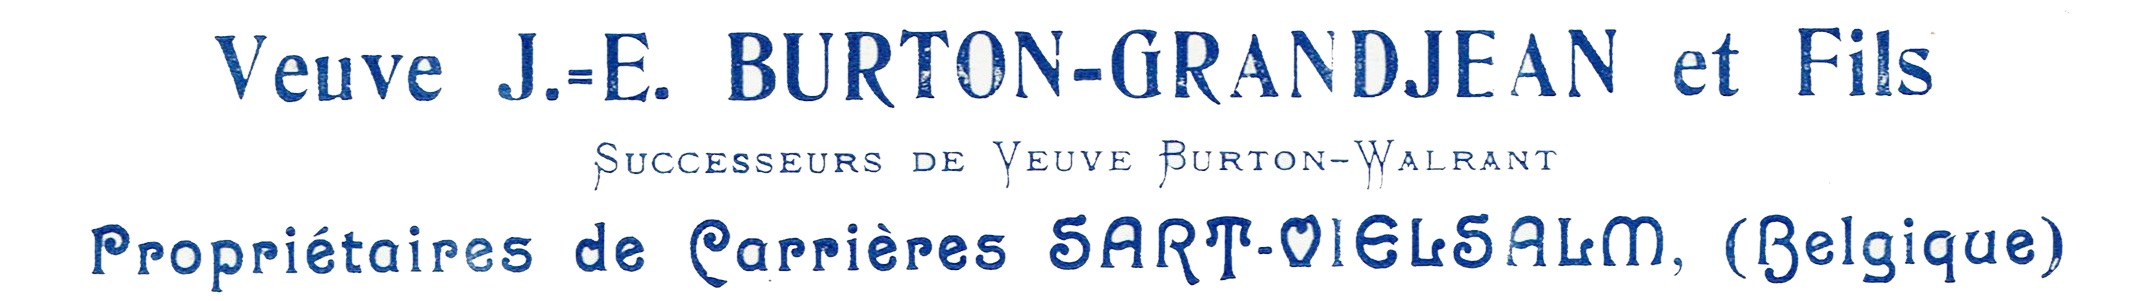 Veuve J.E. Burton-Grandjean et Fils.jpg